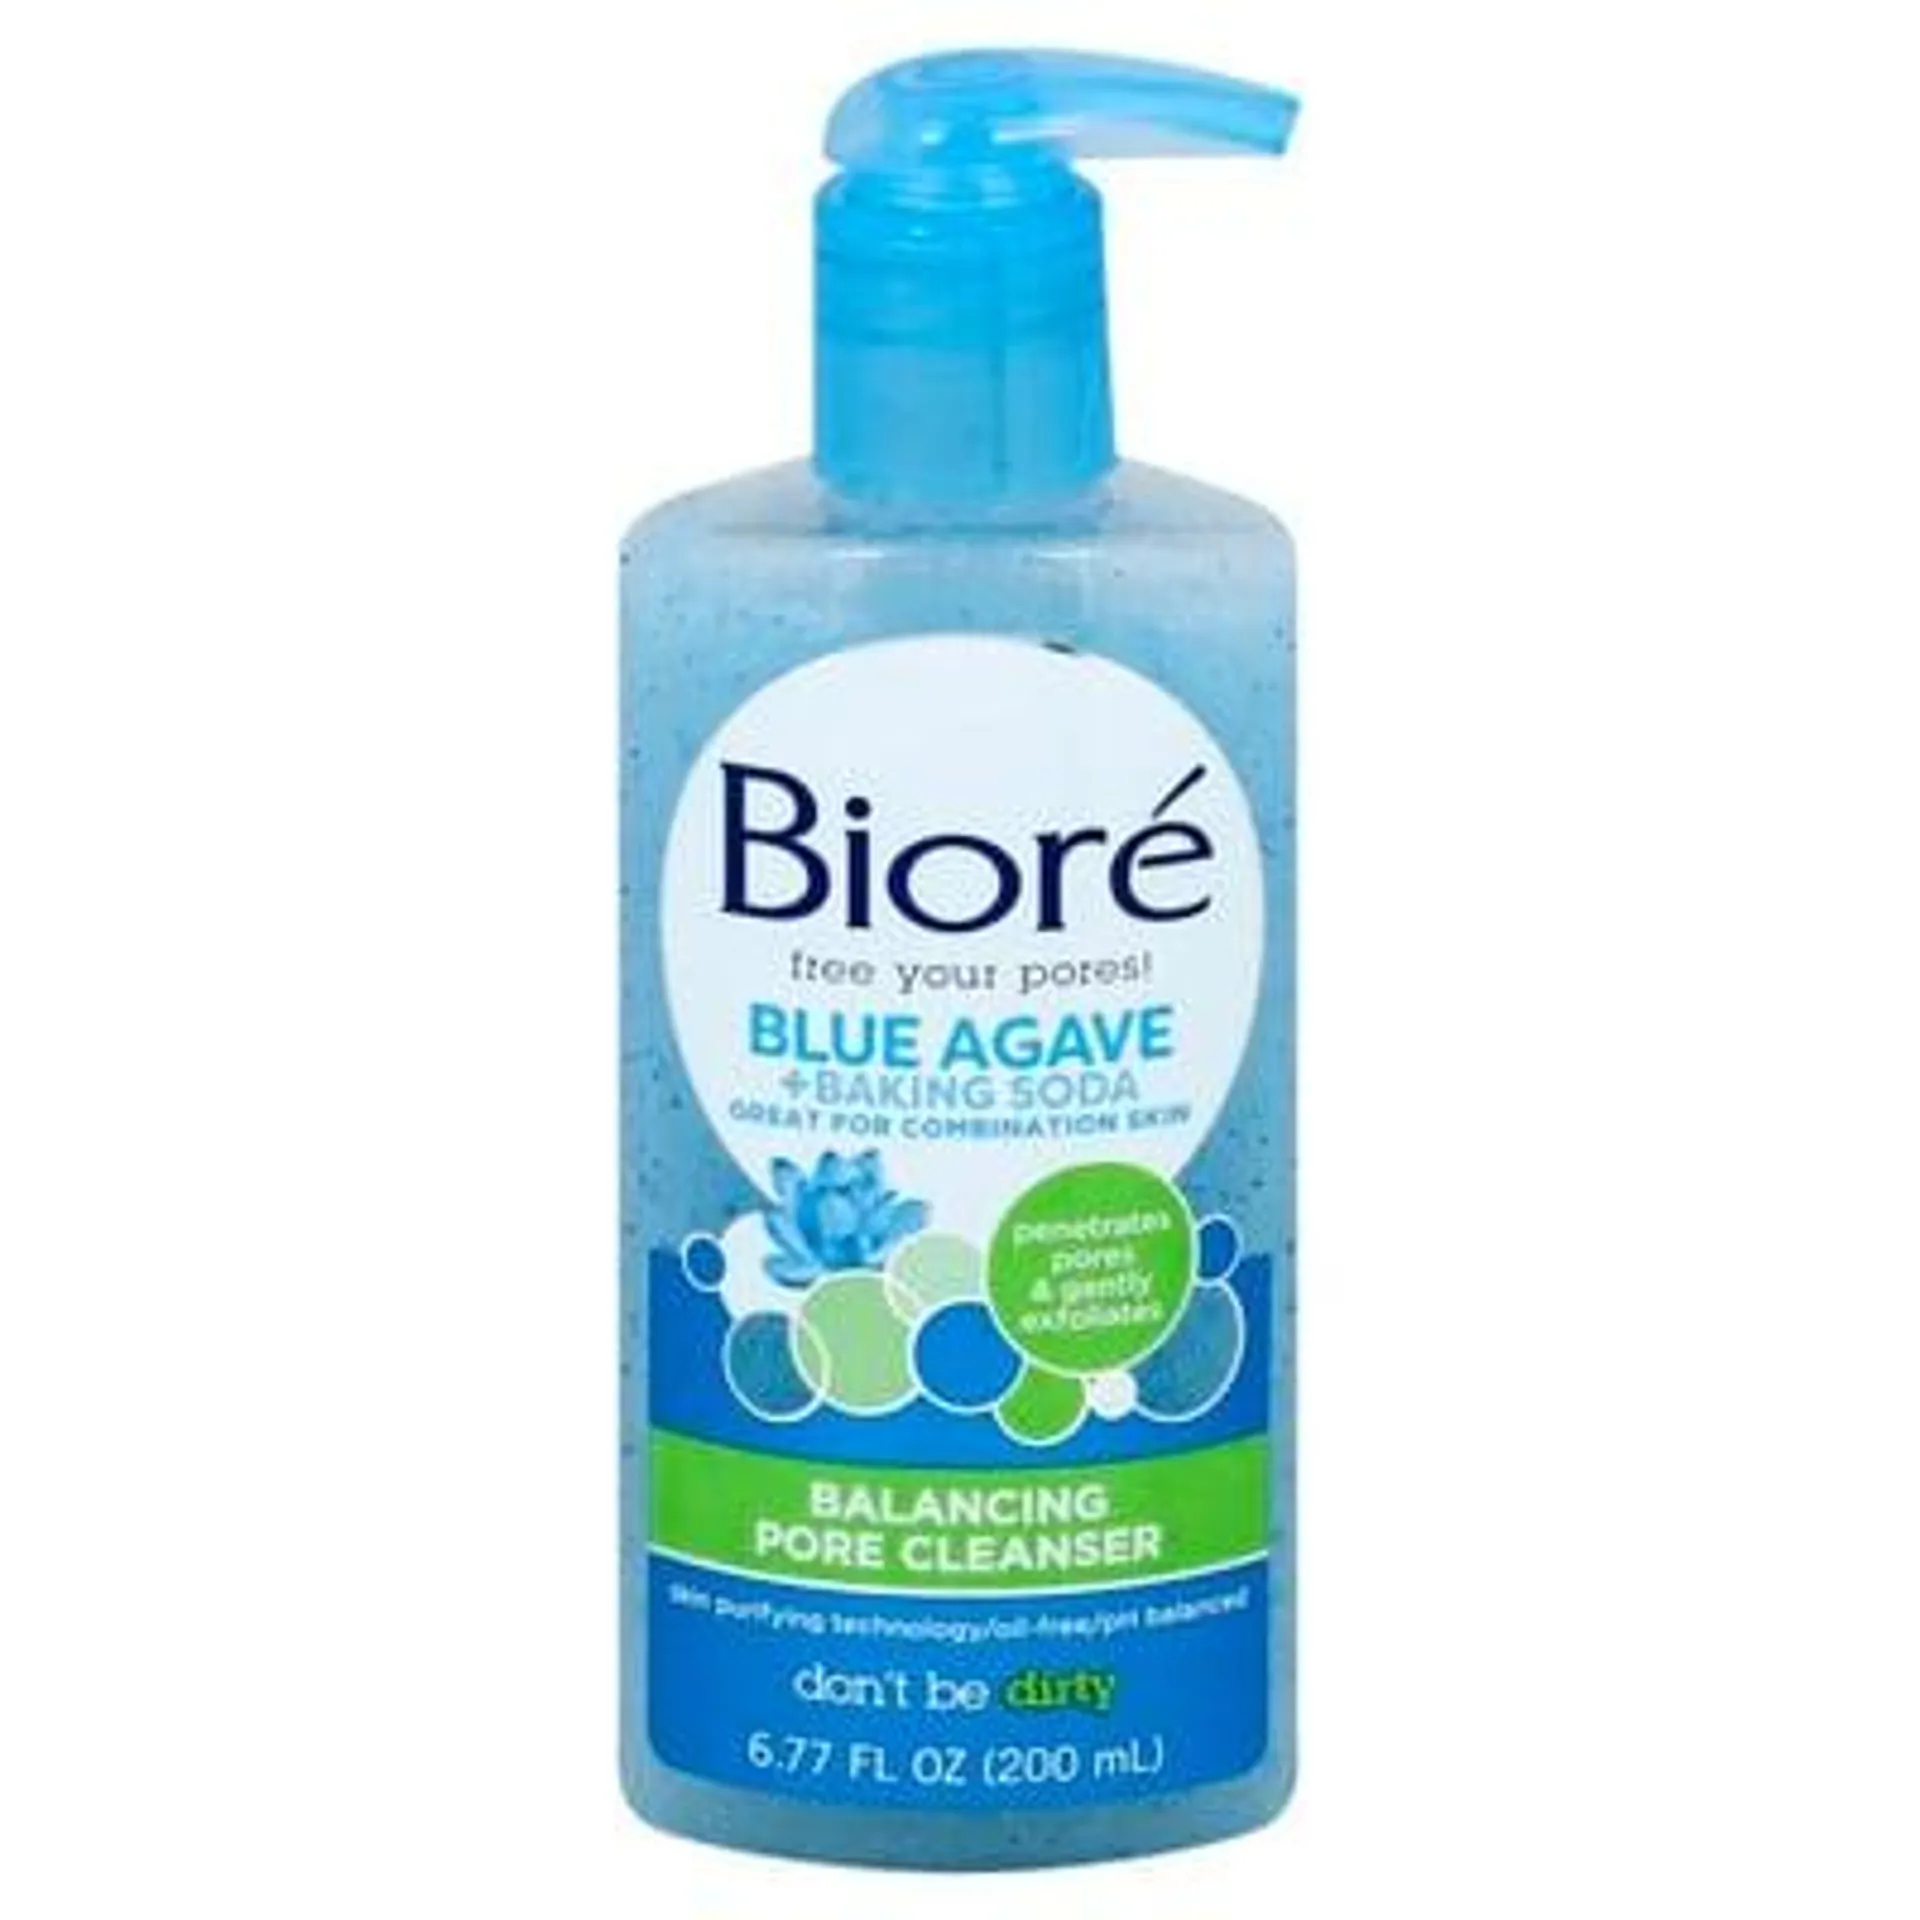 Biore, Pore Cleanser, Balancing, Blue Agave + Baking Soda